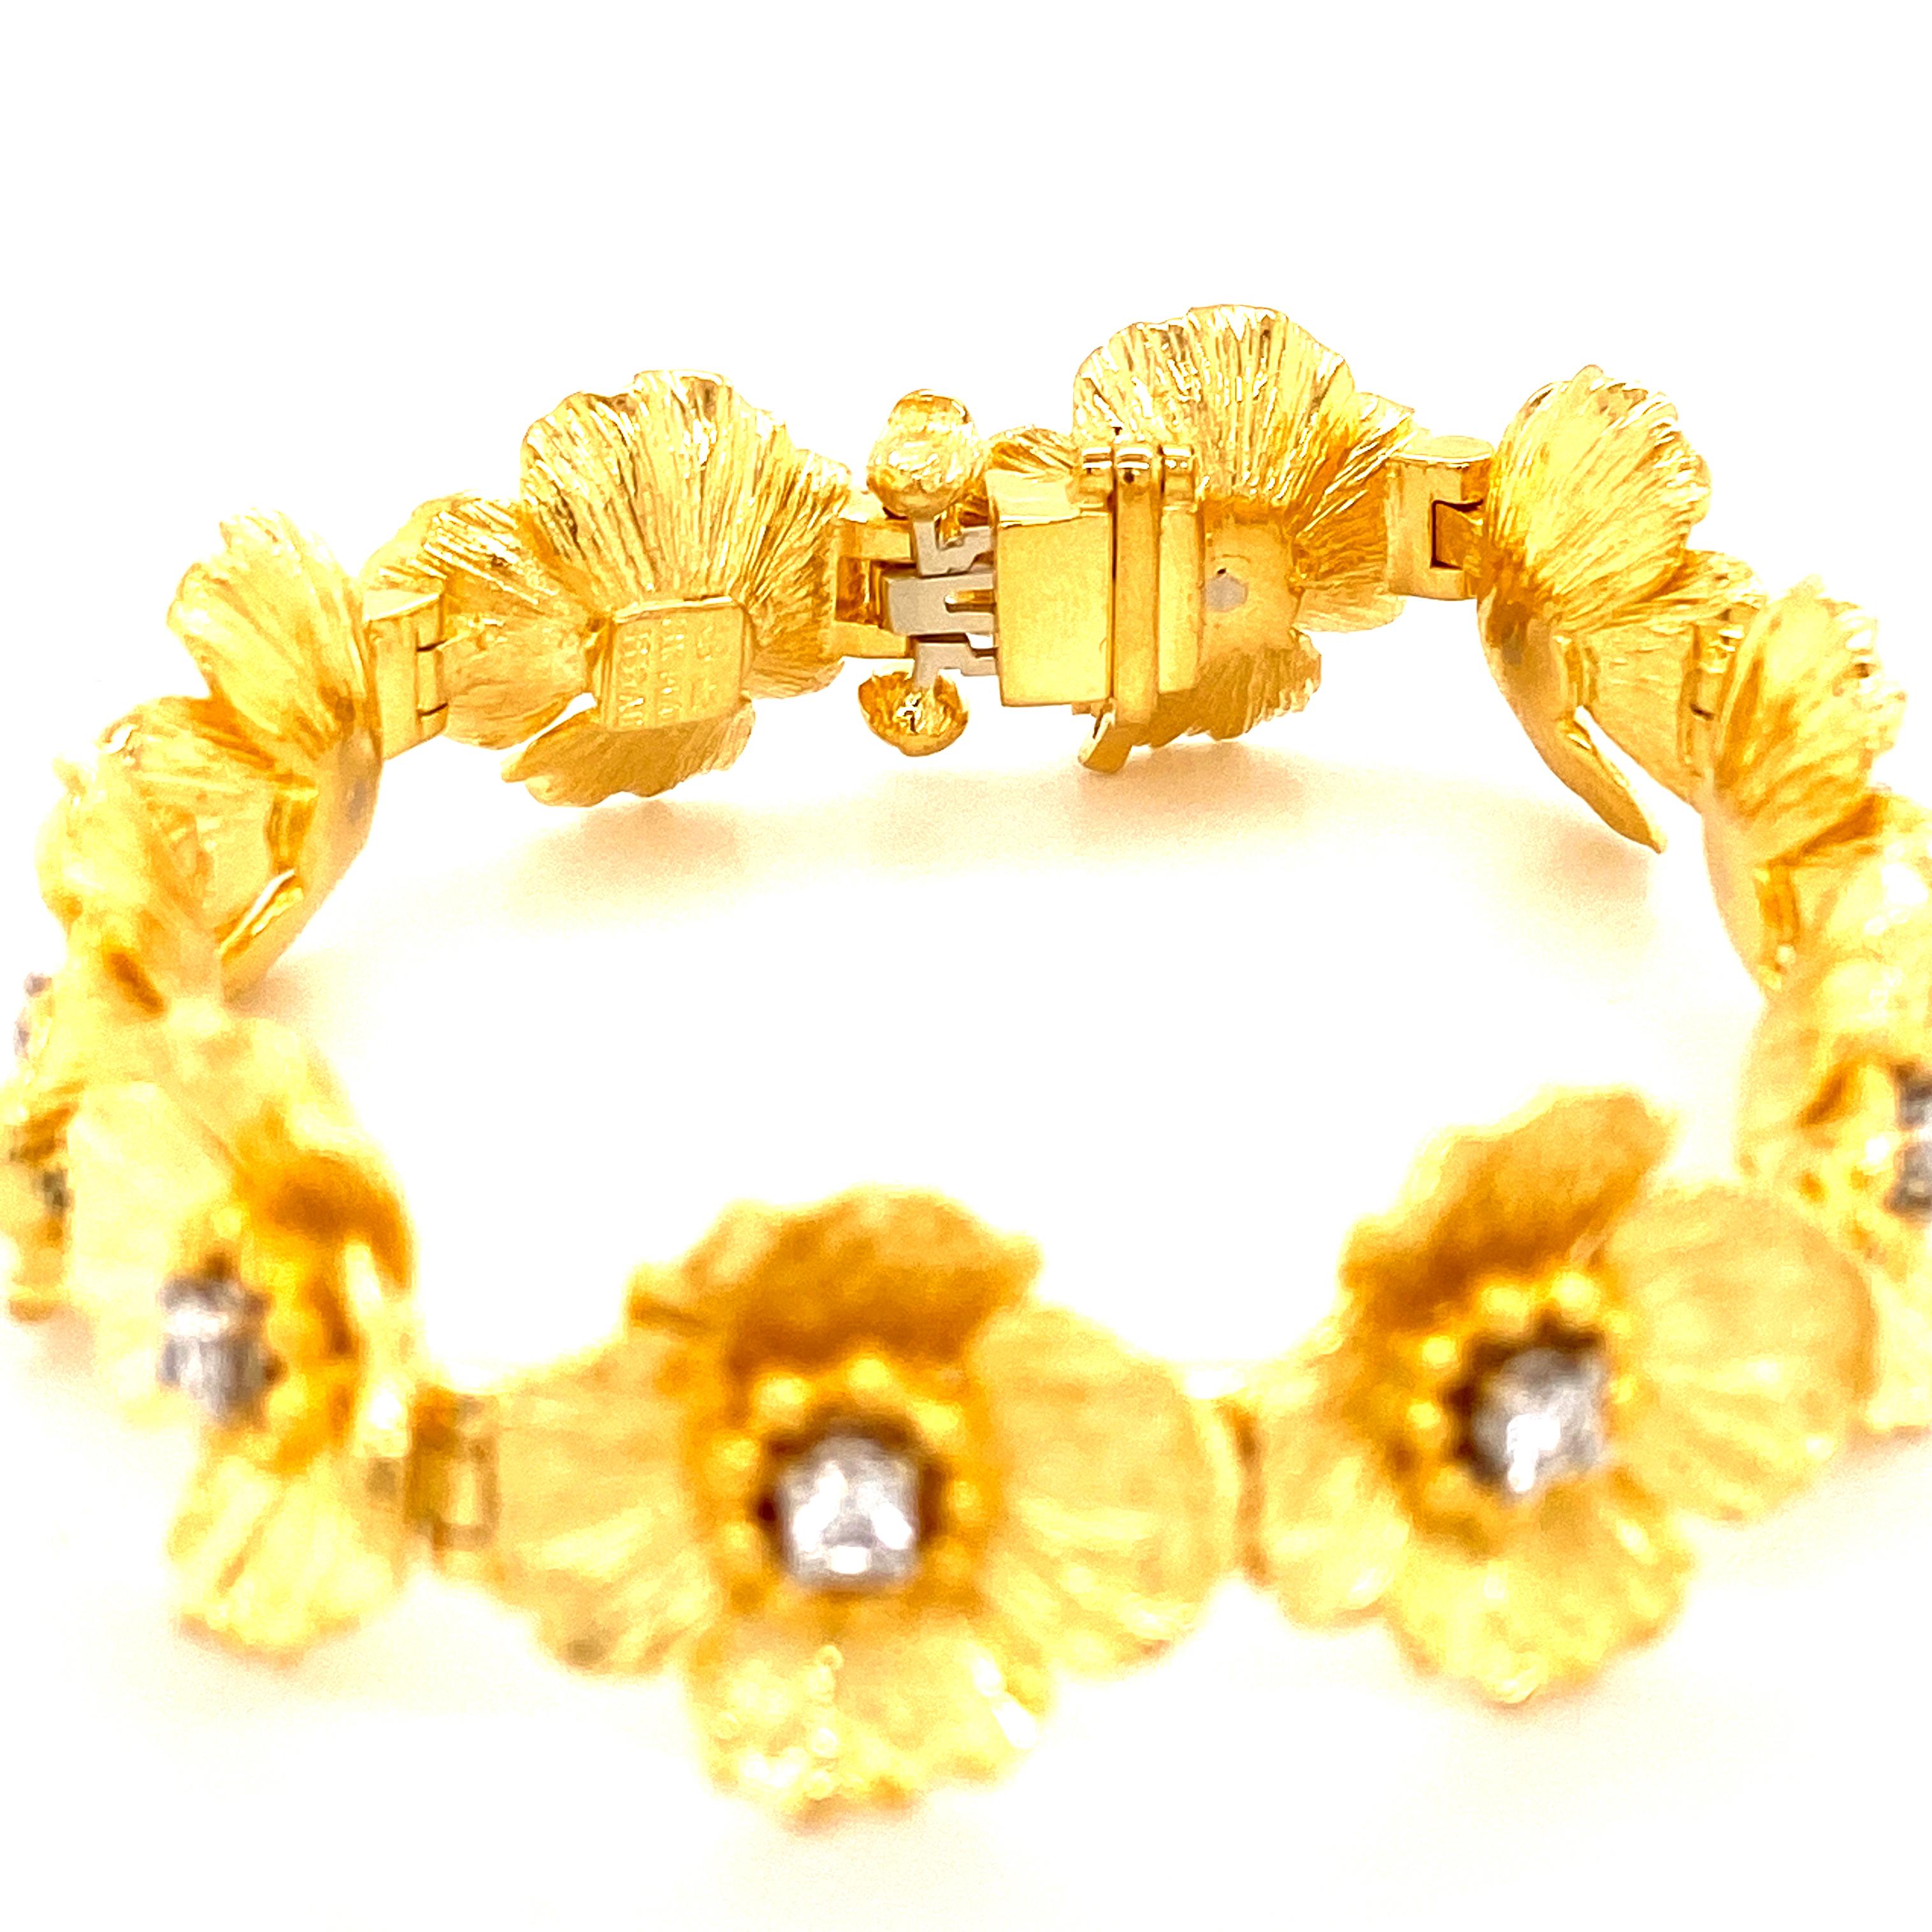 24k gold bracelet with diamonds